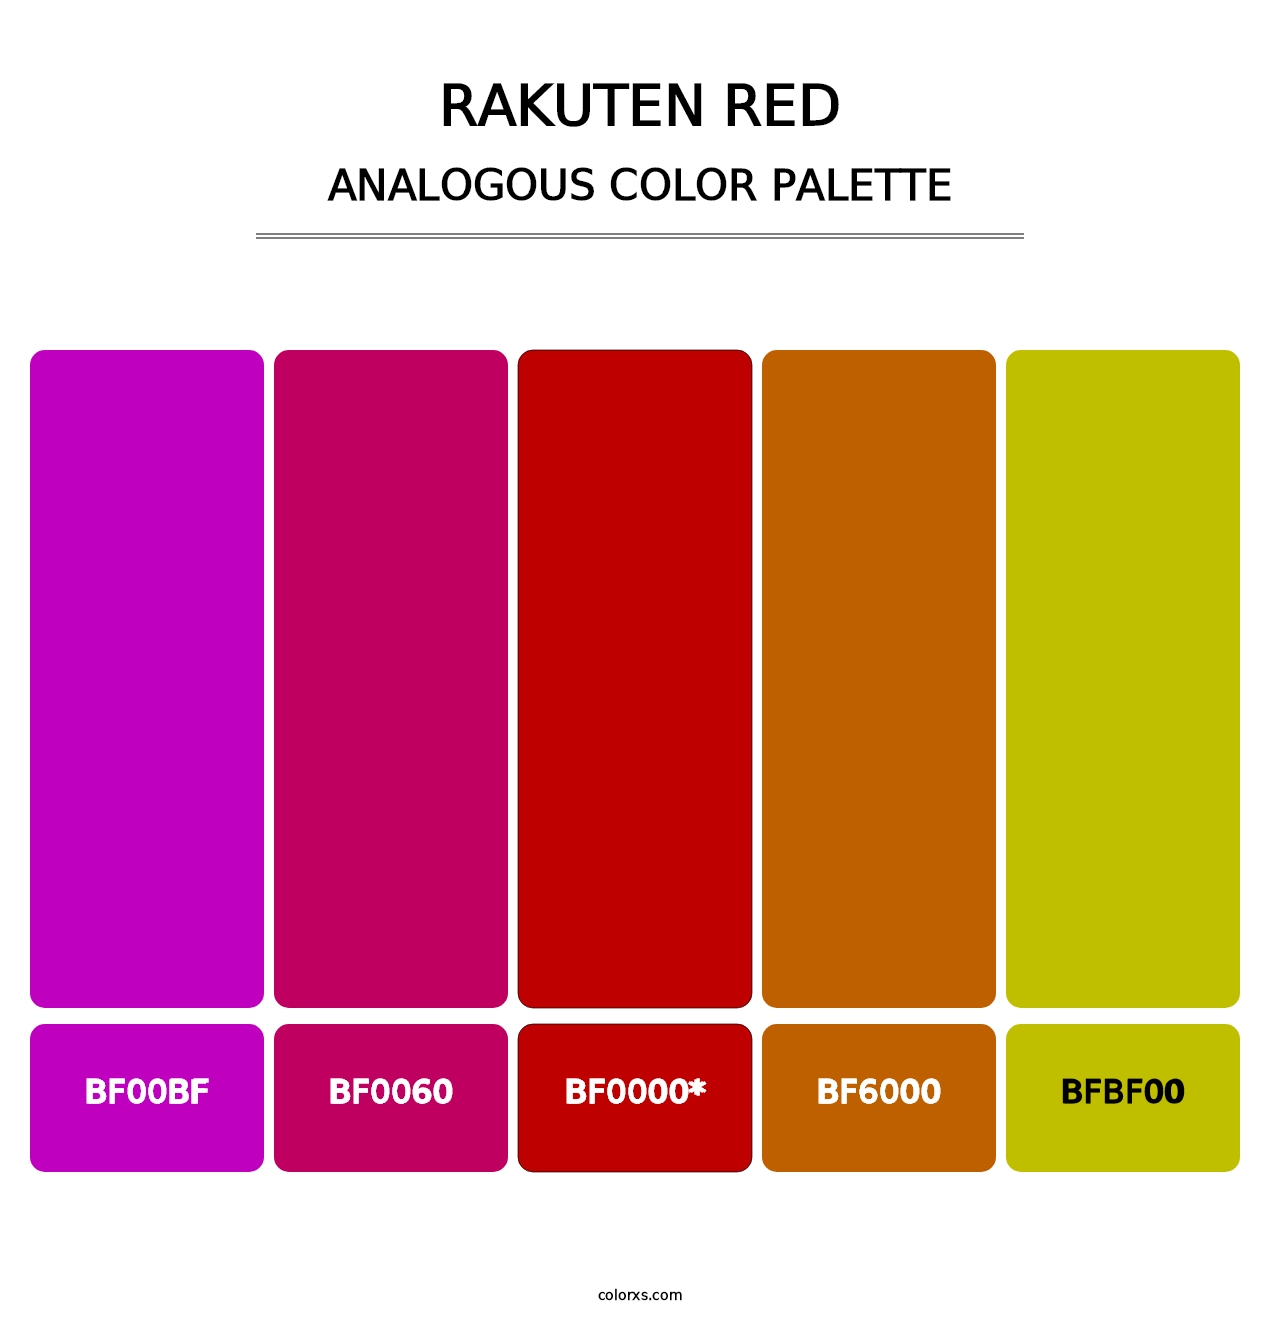 Rakuten Red - Analogous Color Palette